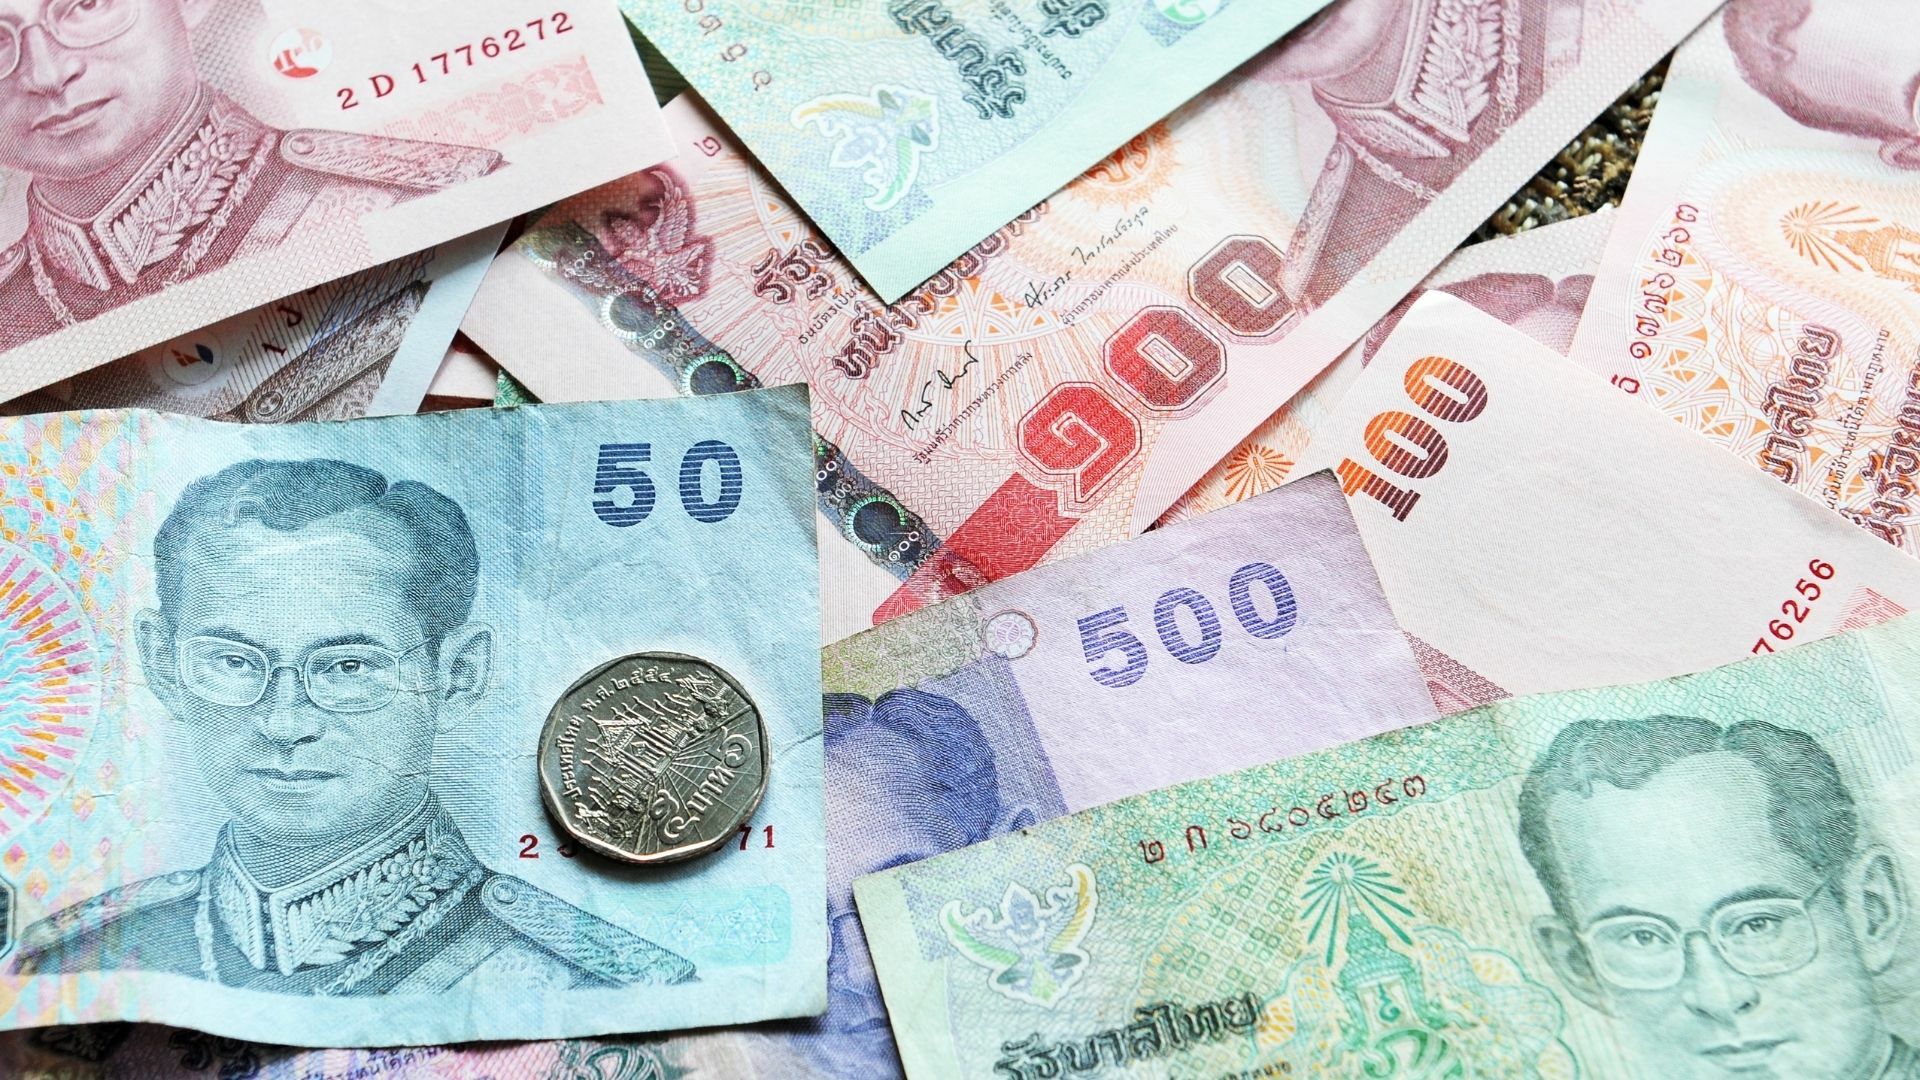 Евро или доллар в тайланде. Валюта Тайланда. Деньги Тайланда. Валюта Тайланда фото. Валюта Бангкока.